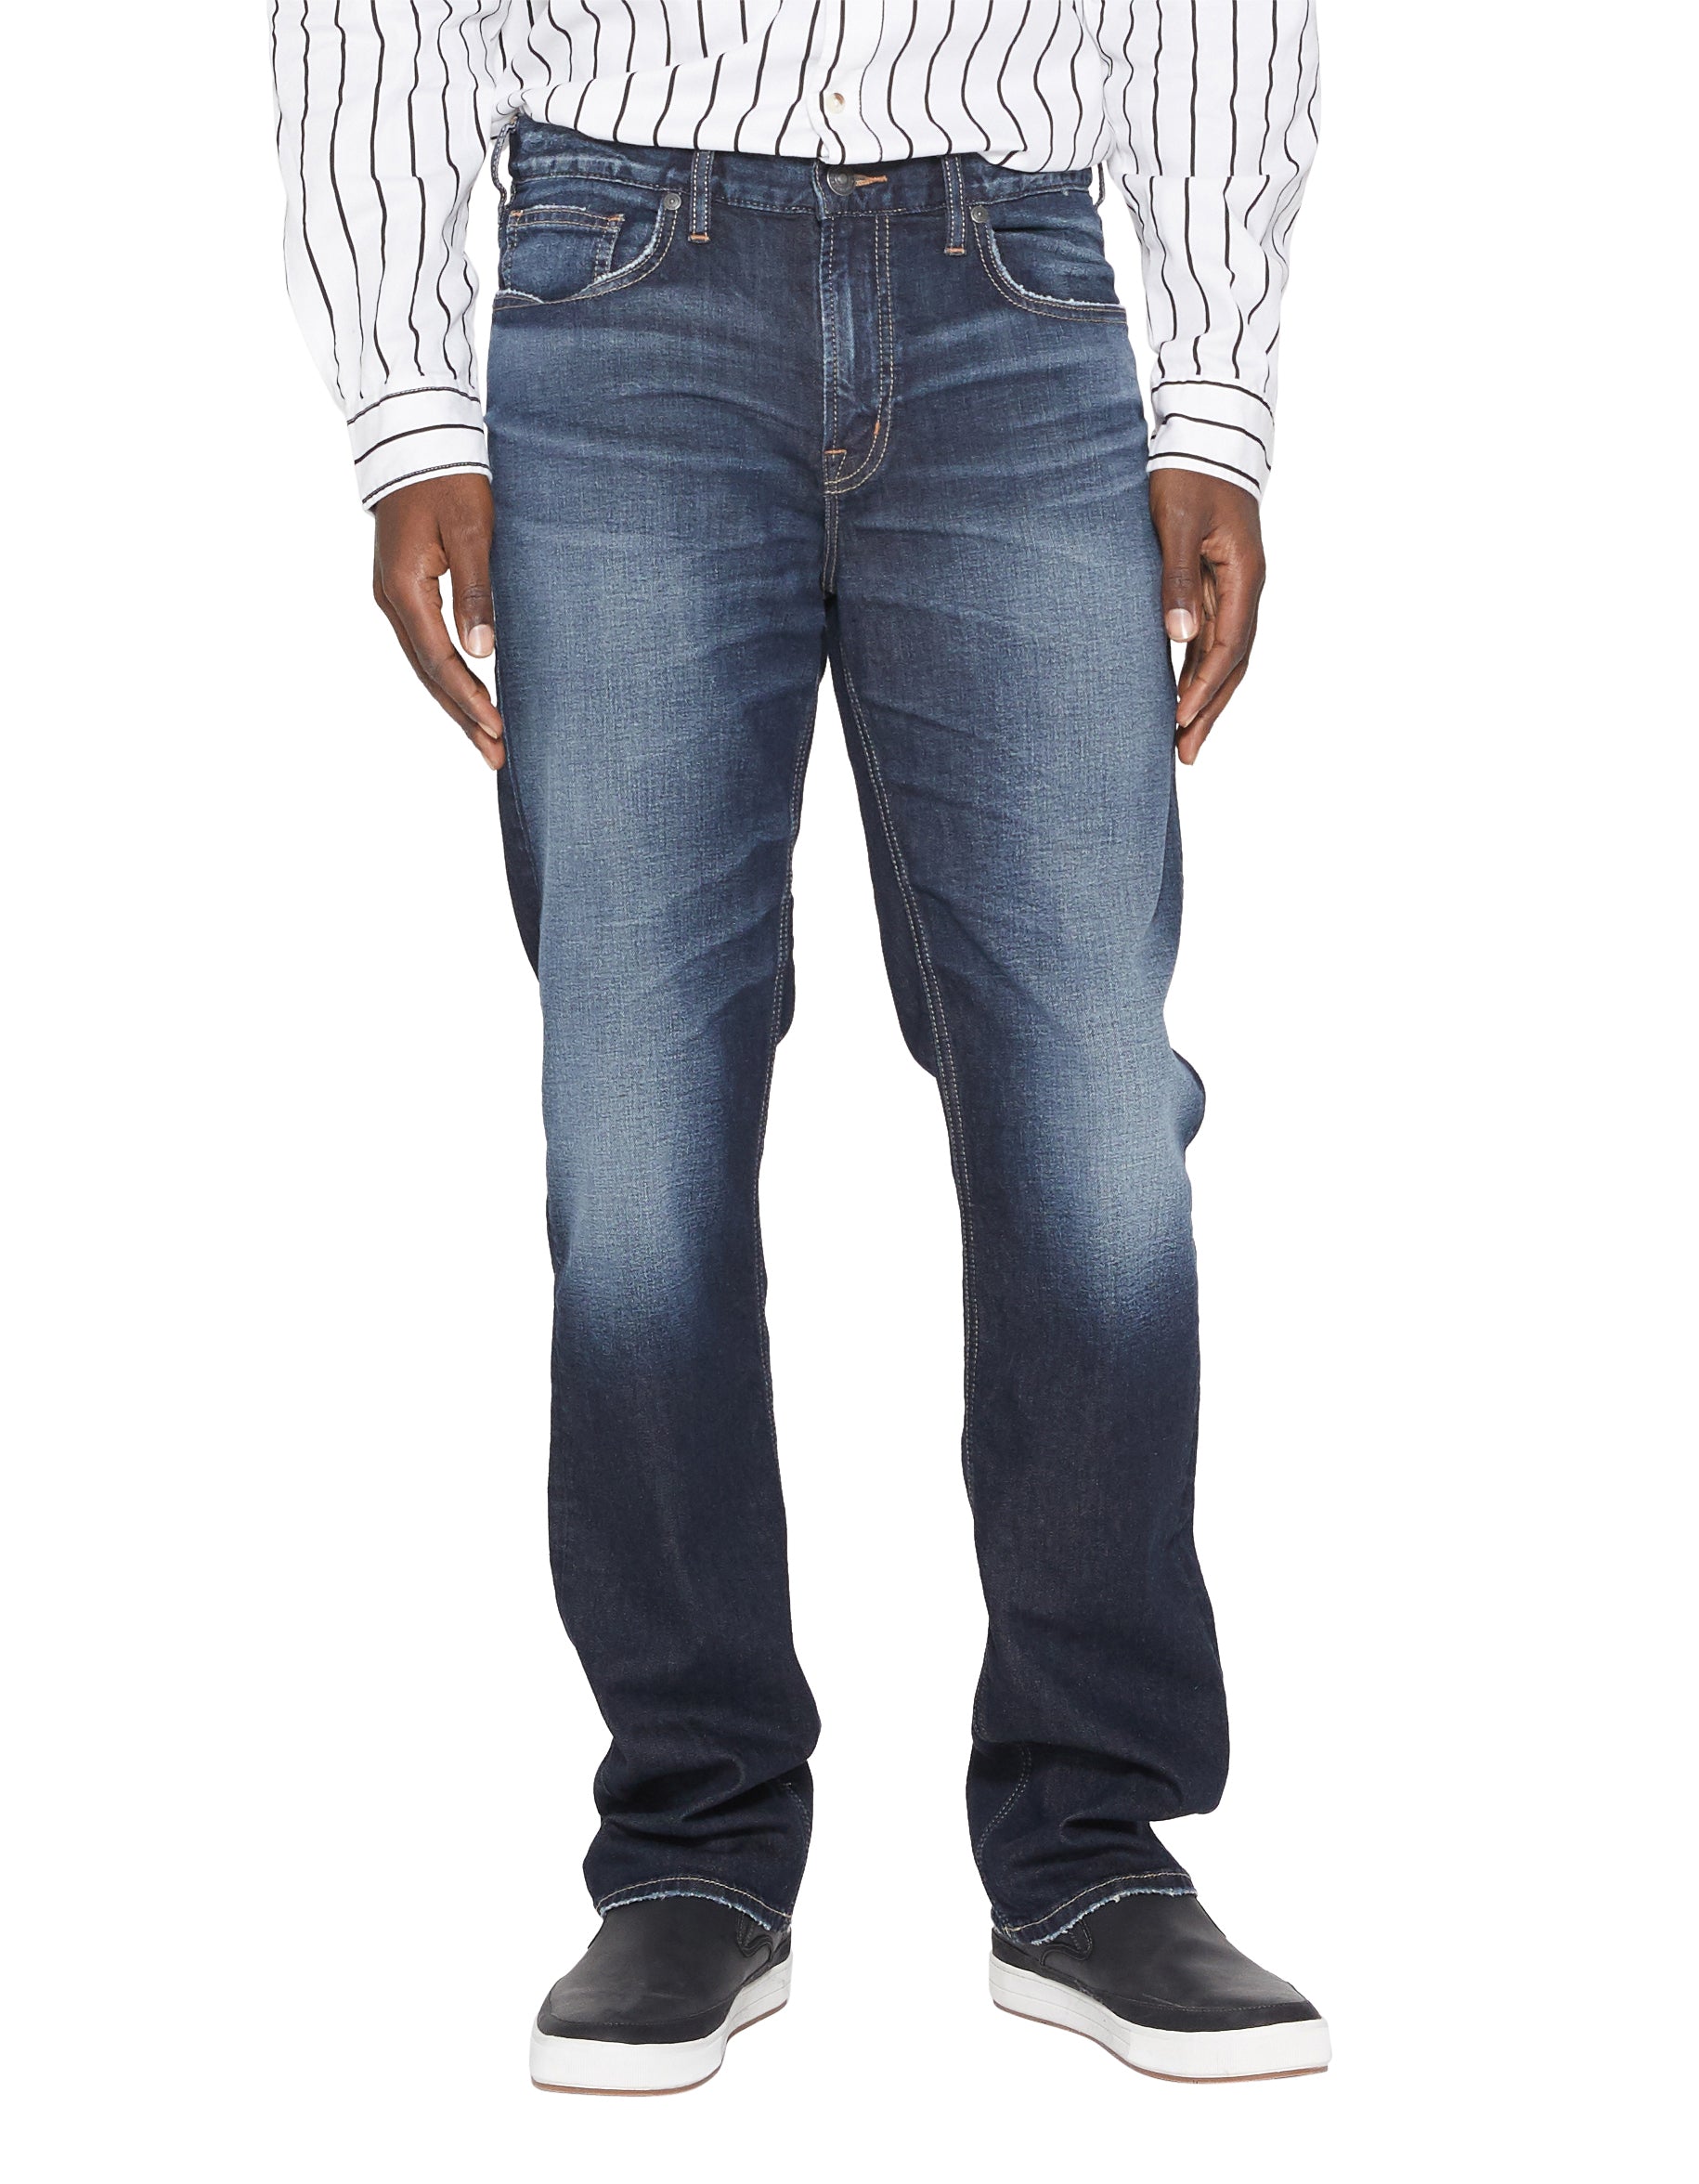 'Silver Jeans' Men's Grayson Easy Fit Straight Leg - Indigo